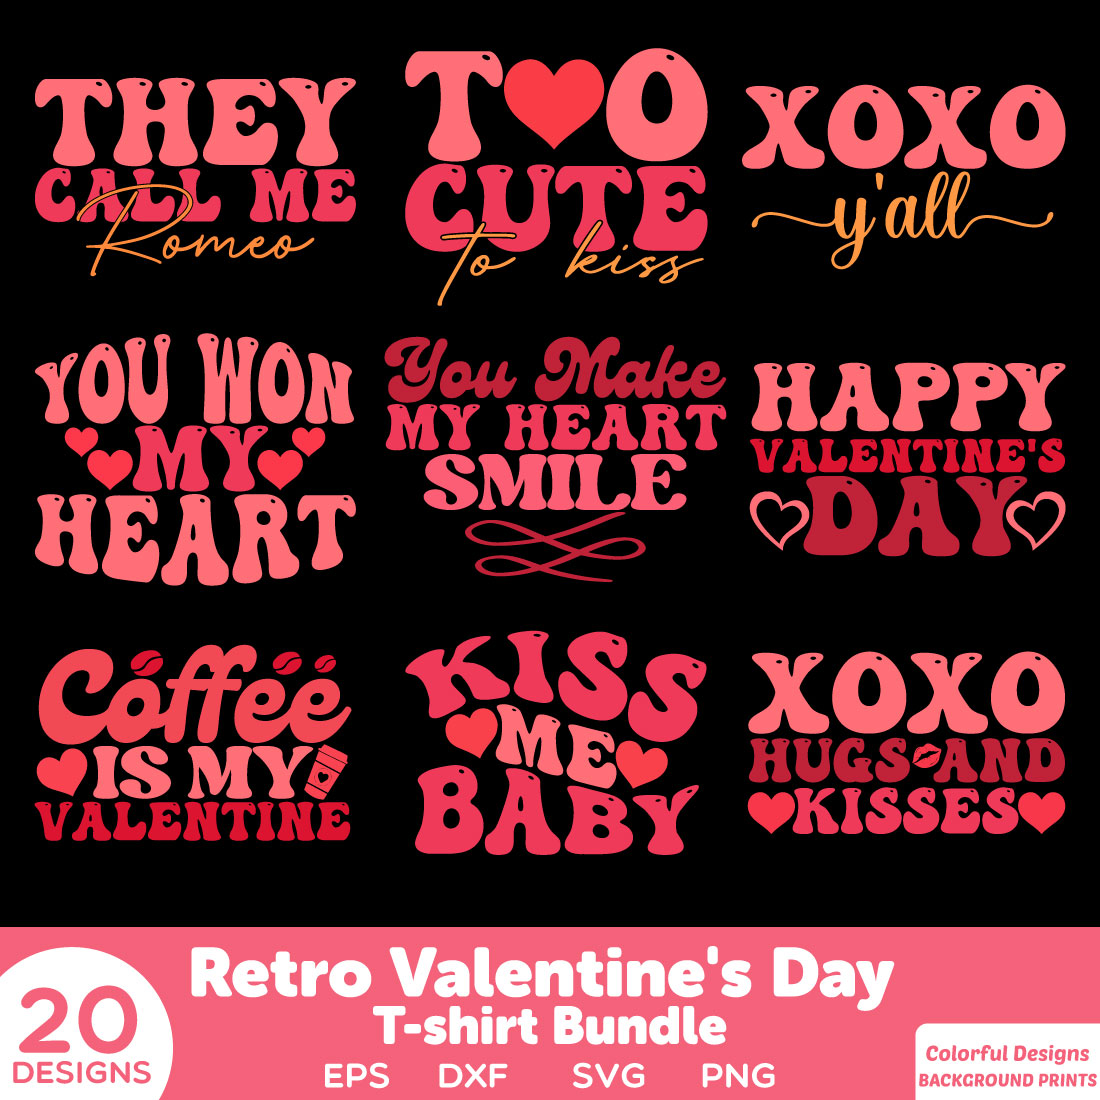 Retro Valentine’s Day T Shirt Bundle cover image.